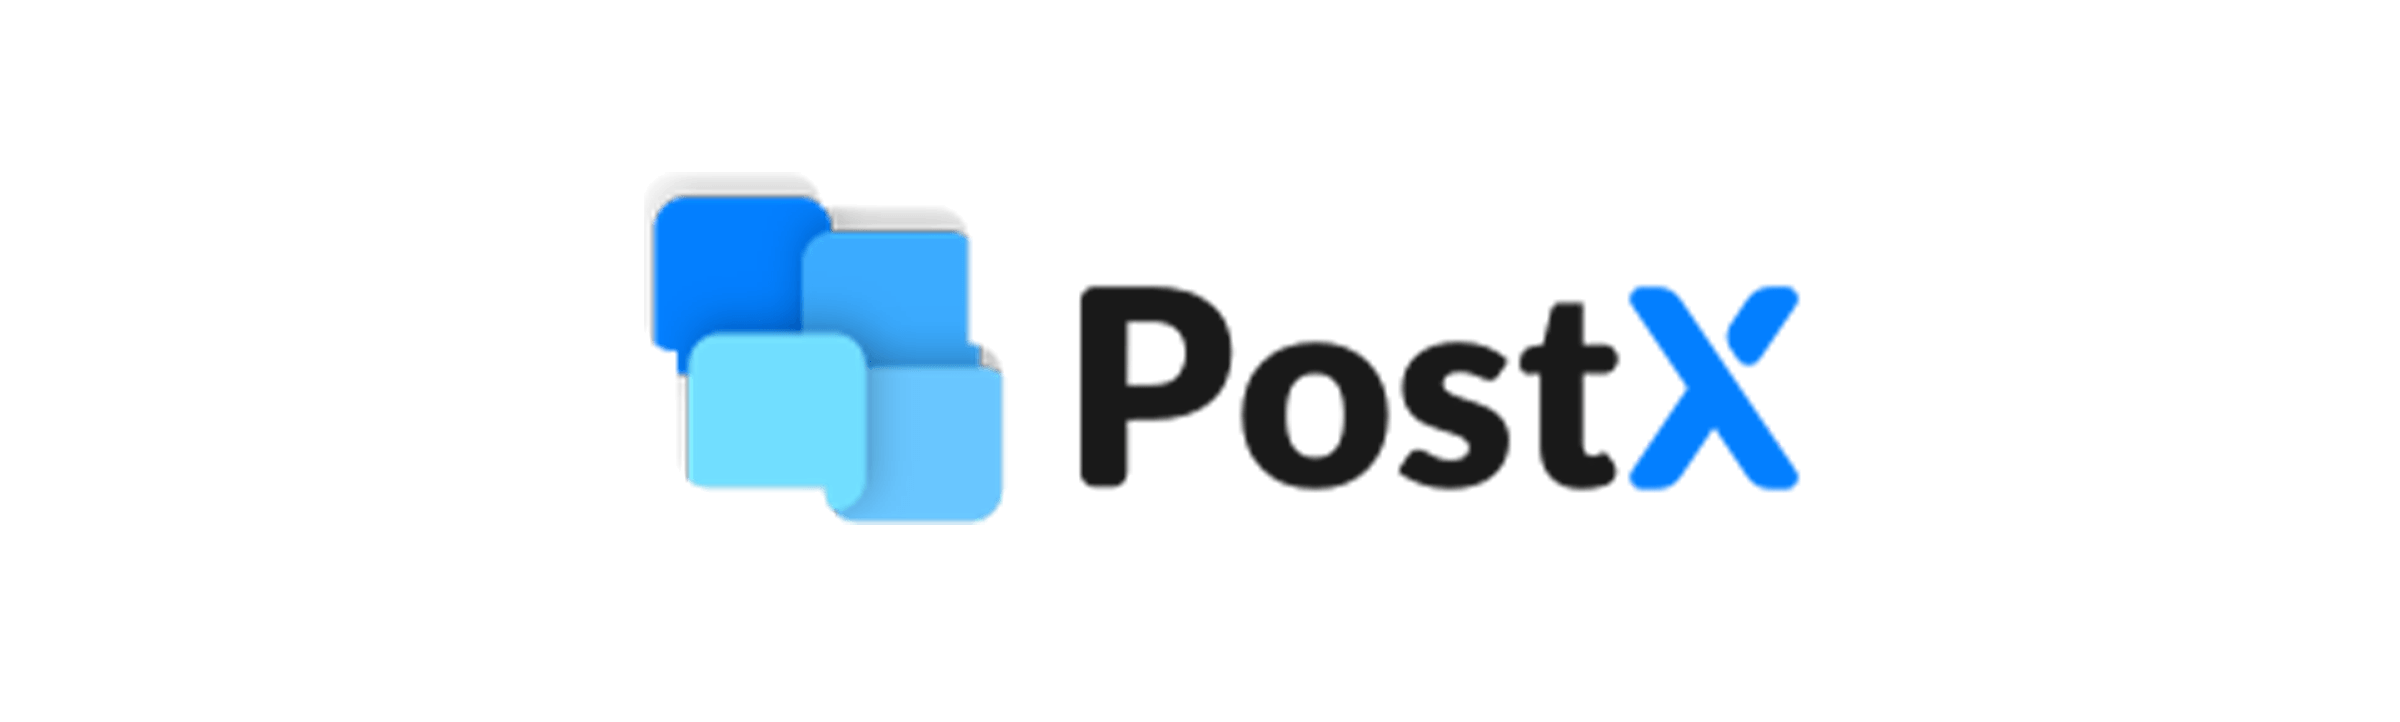 Postx Logo